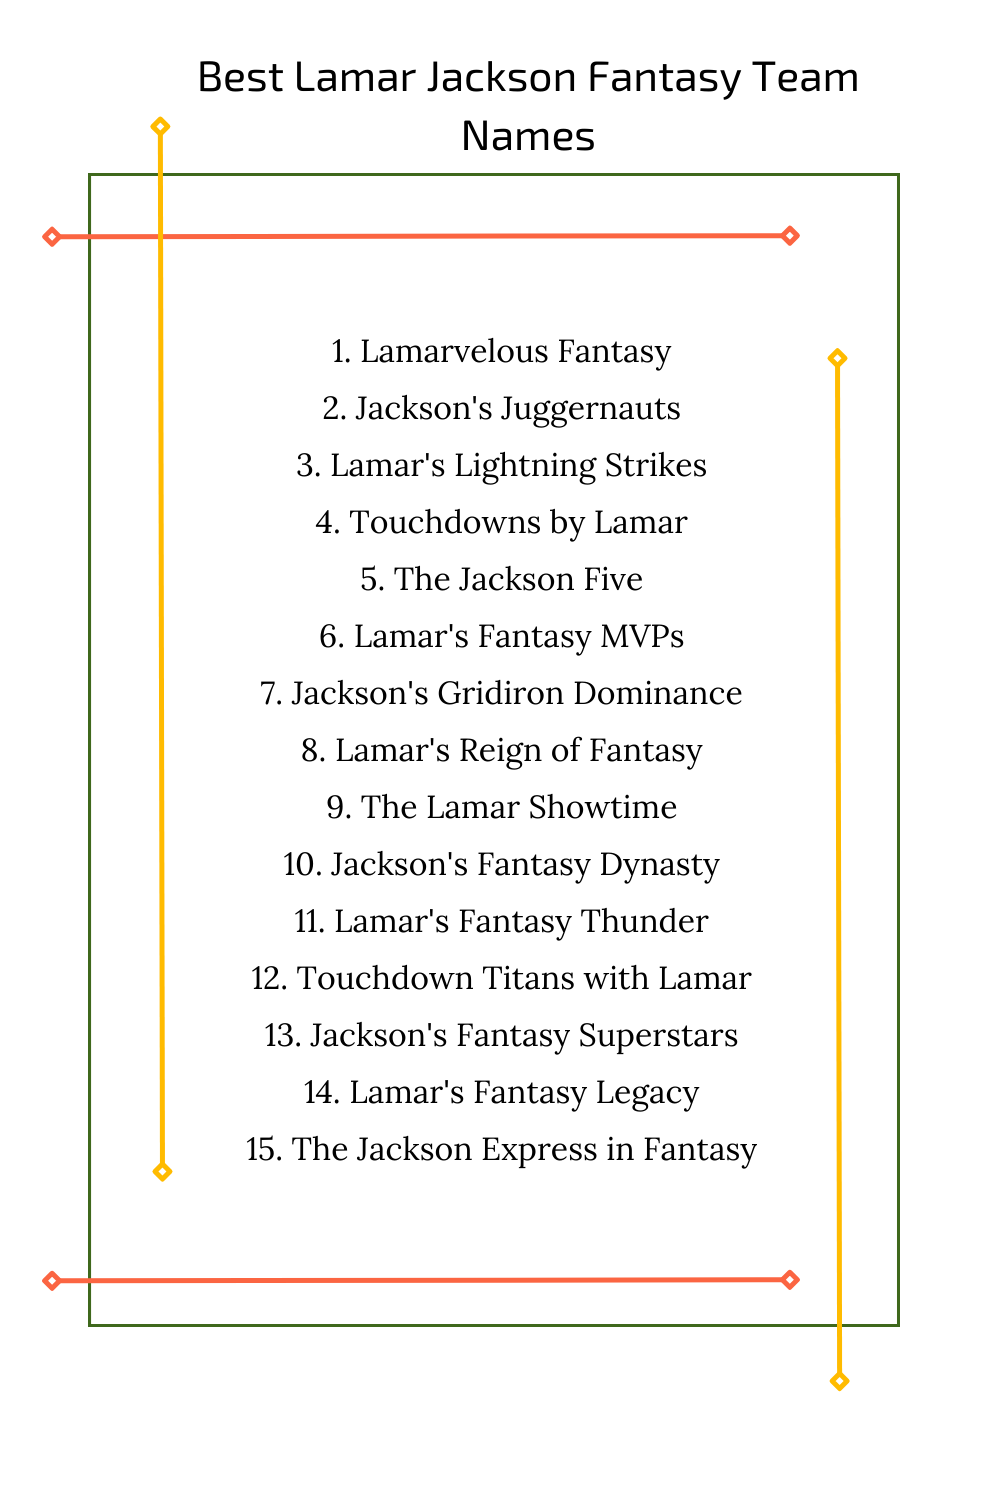 Best Lamar Jackson Fantasy Team Names